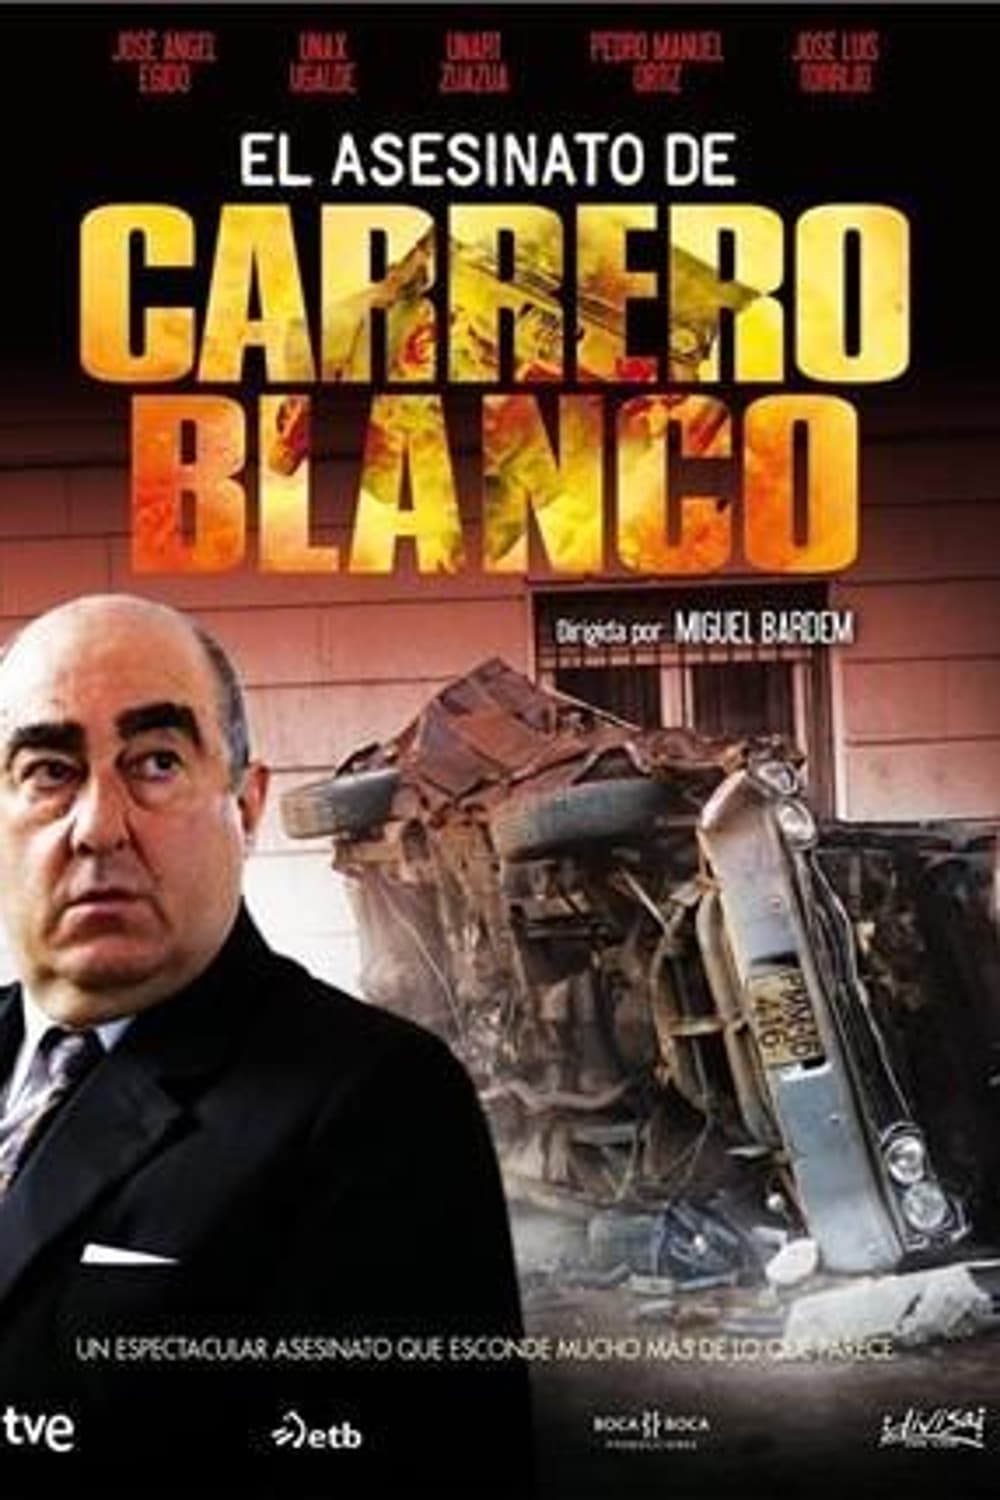 El asesinato de Carrero Blanco TV Shows About Eta Terrorist Gang